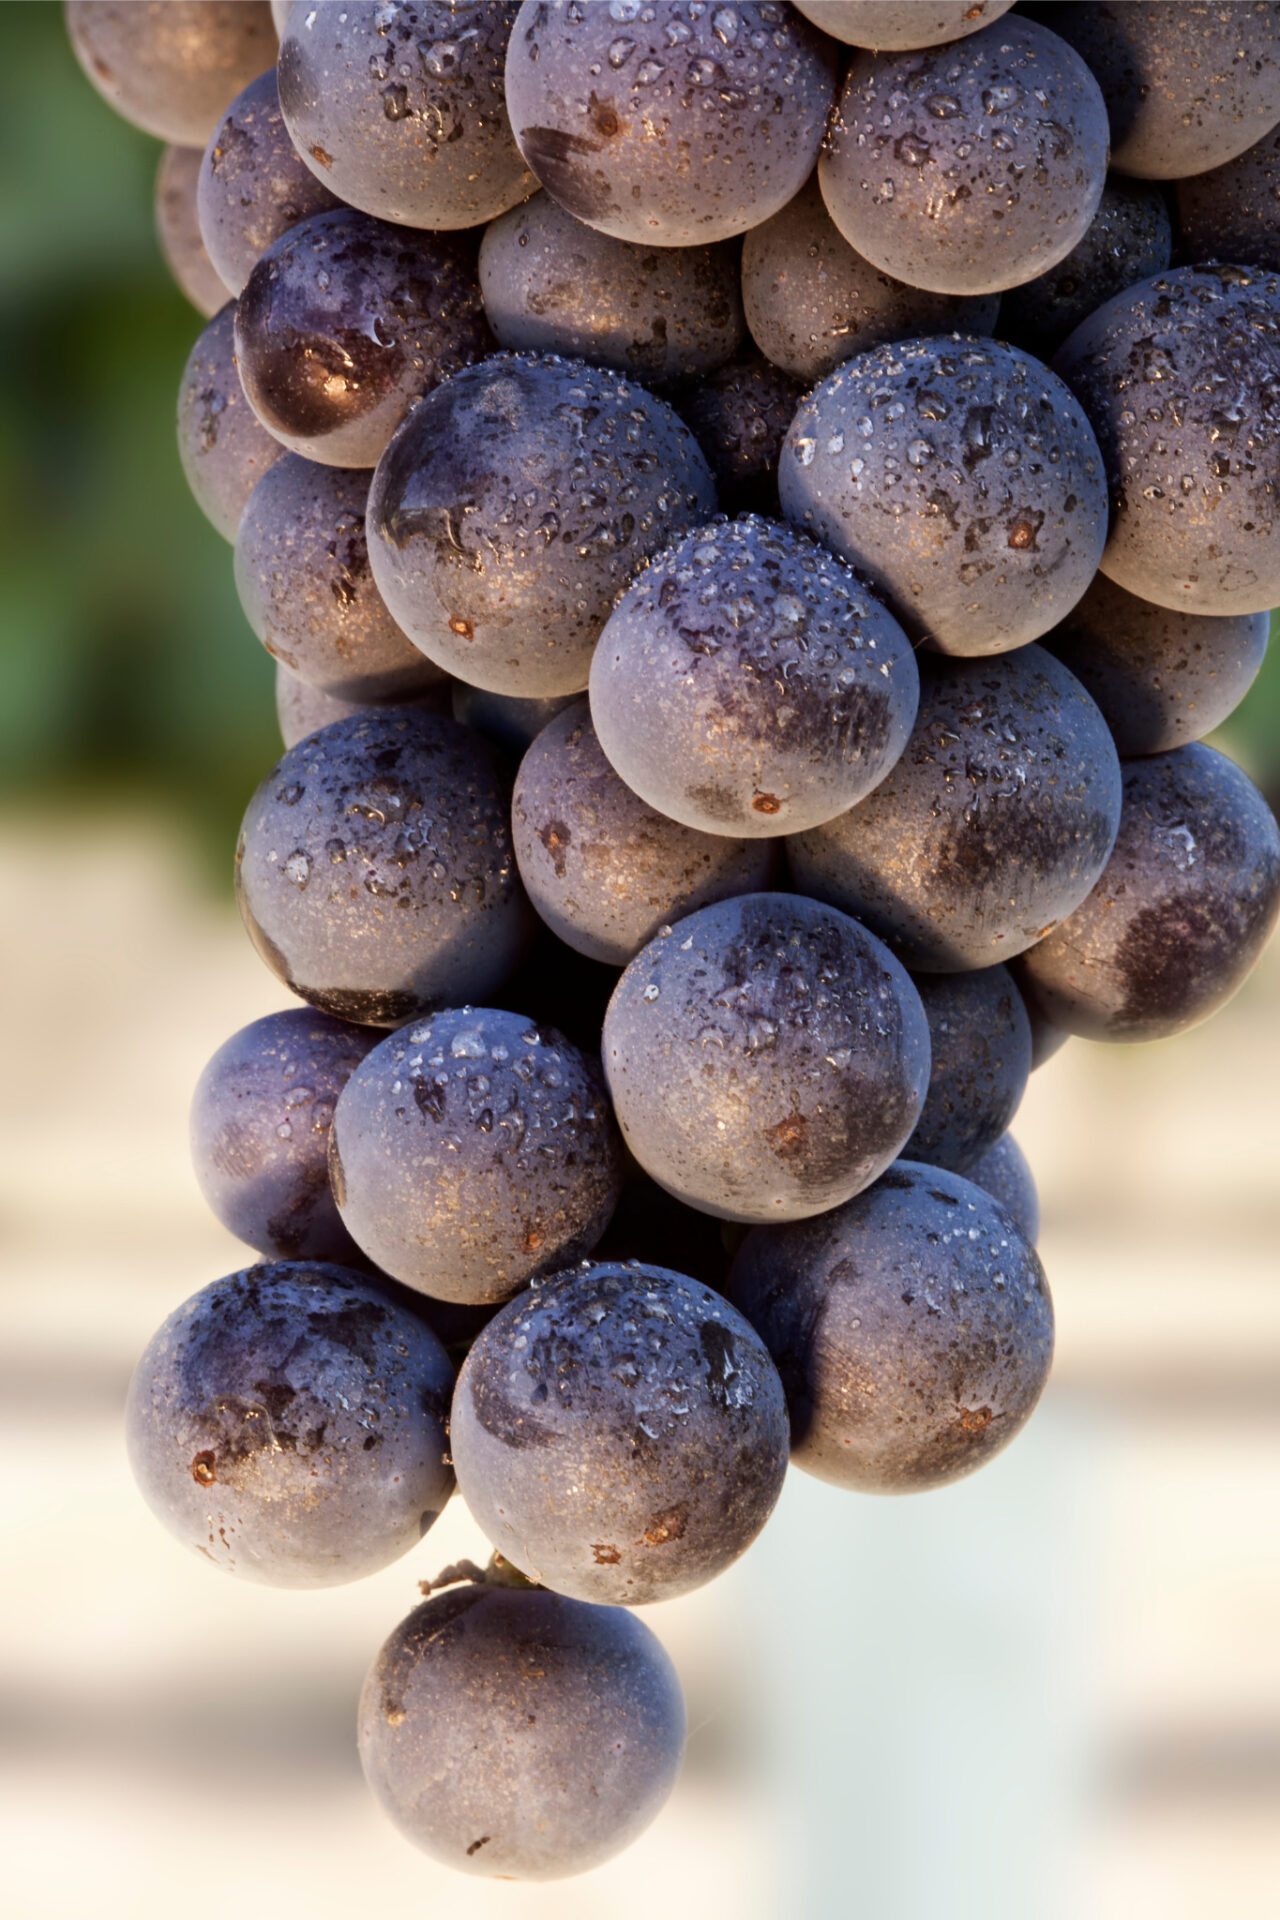 Corvina grapes